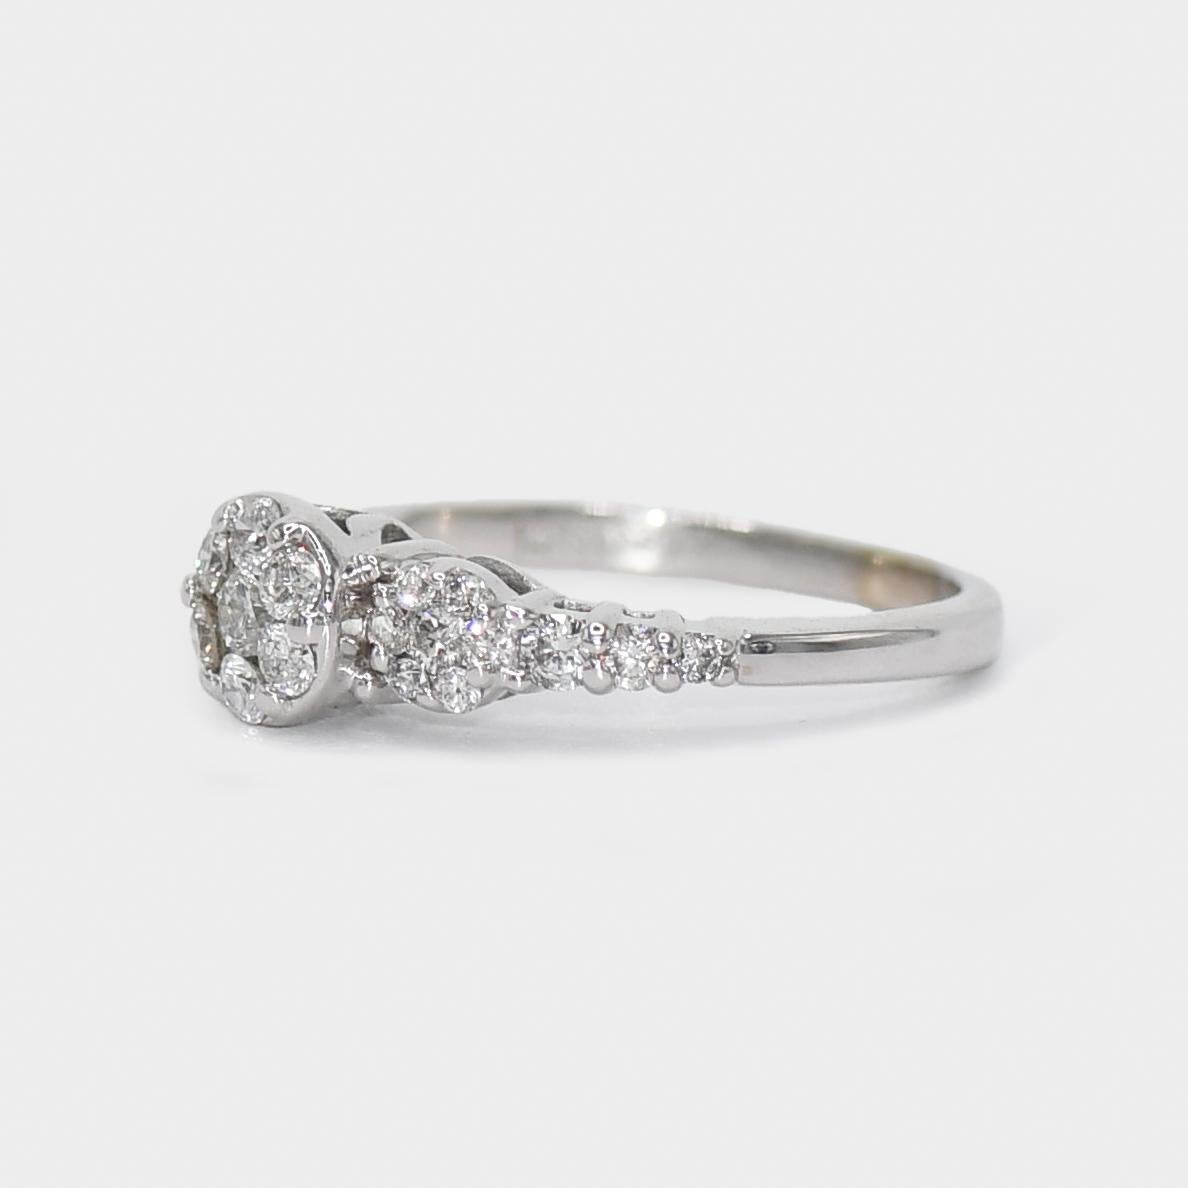 14K White Gold Ladies' Diamond Cluster Ring 0.40tdw, 2.6g For Sale 1